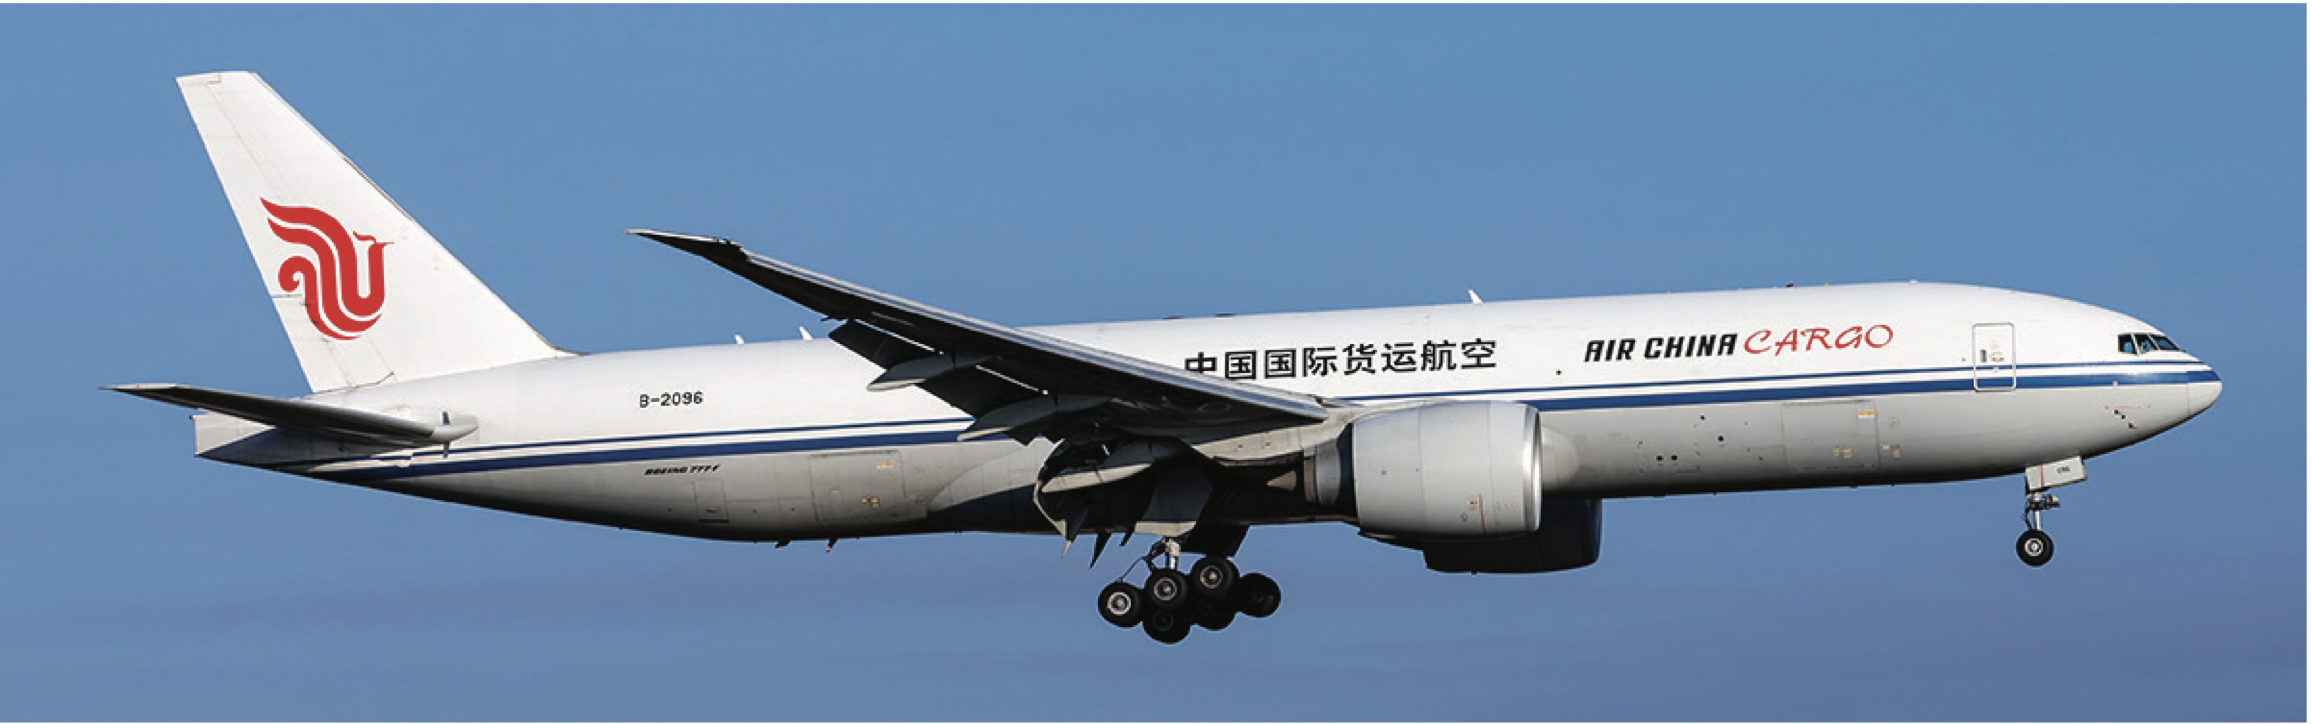 Vrachtvliegtuig Air China Cargo